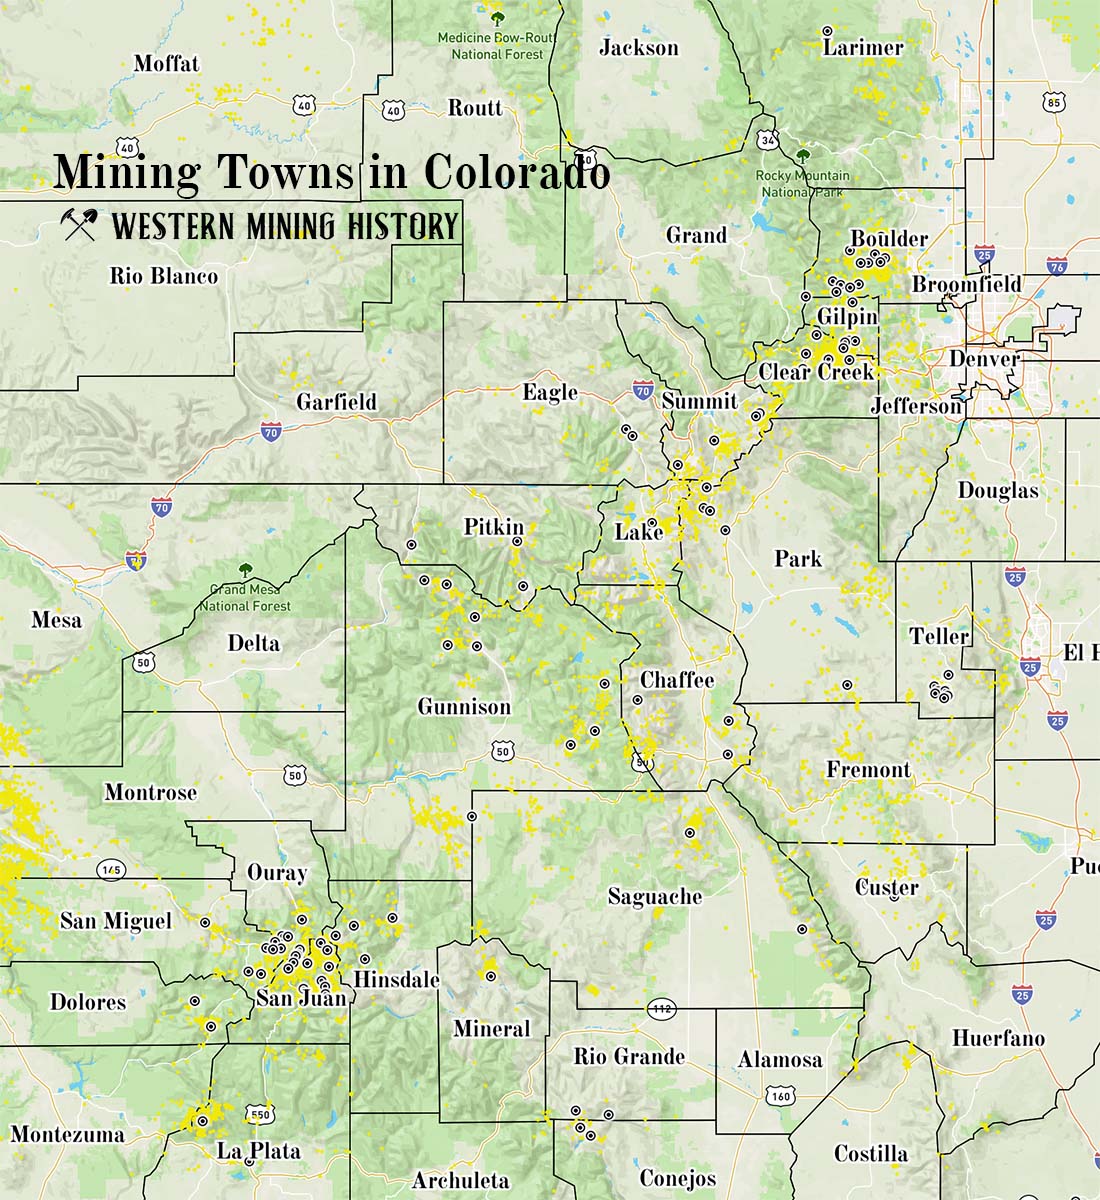 A tour of Colorado mining towns